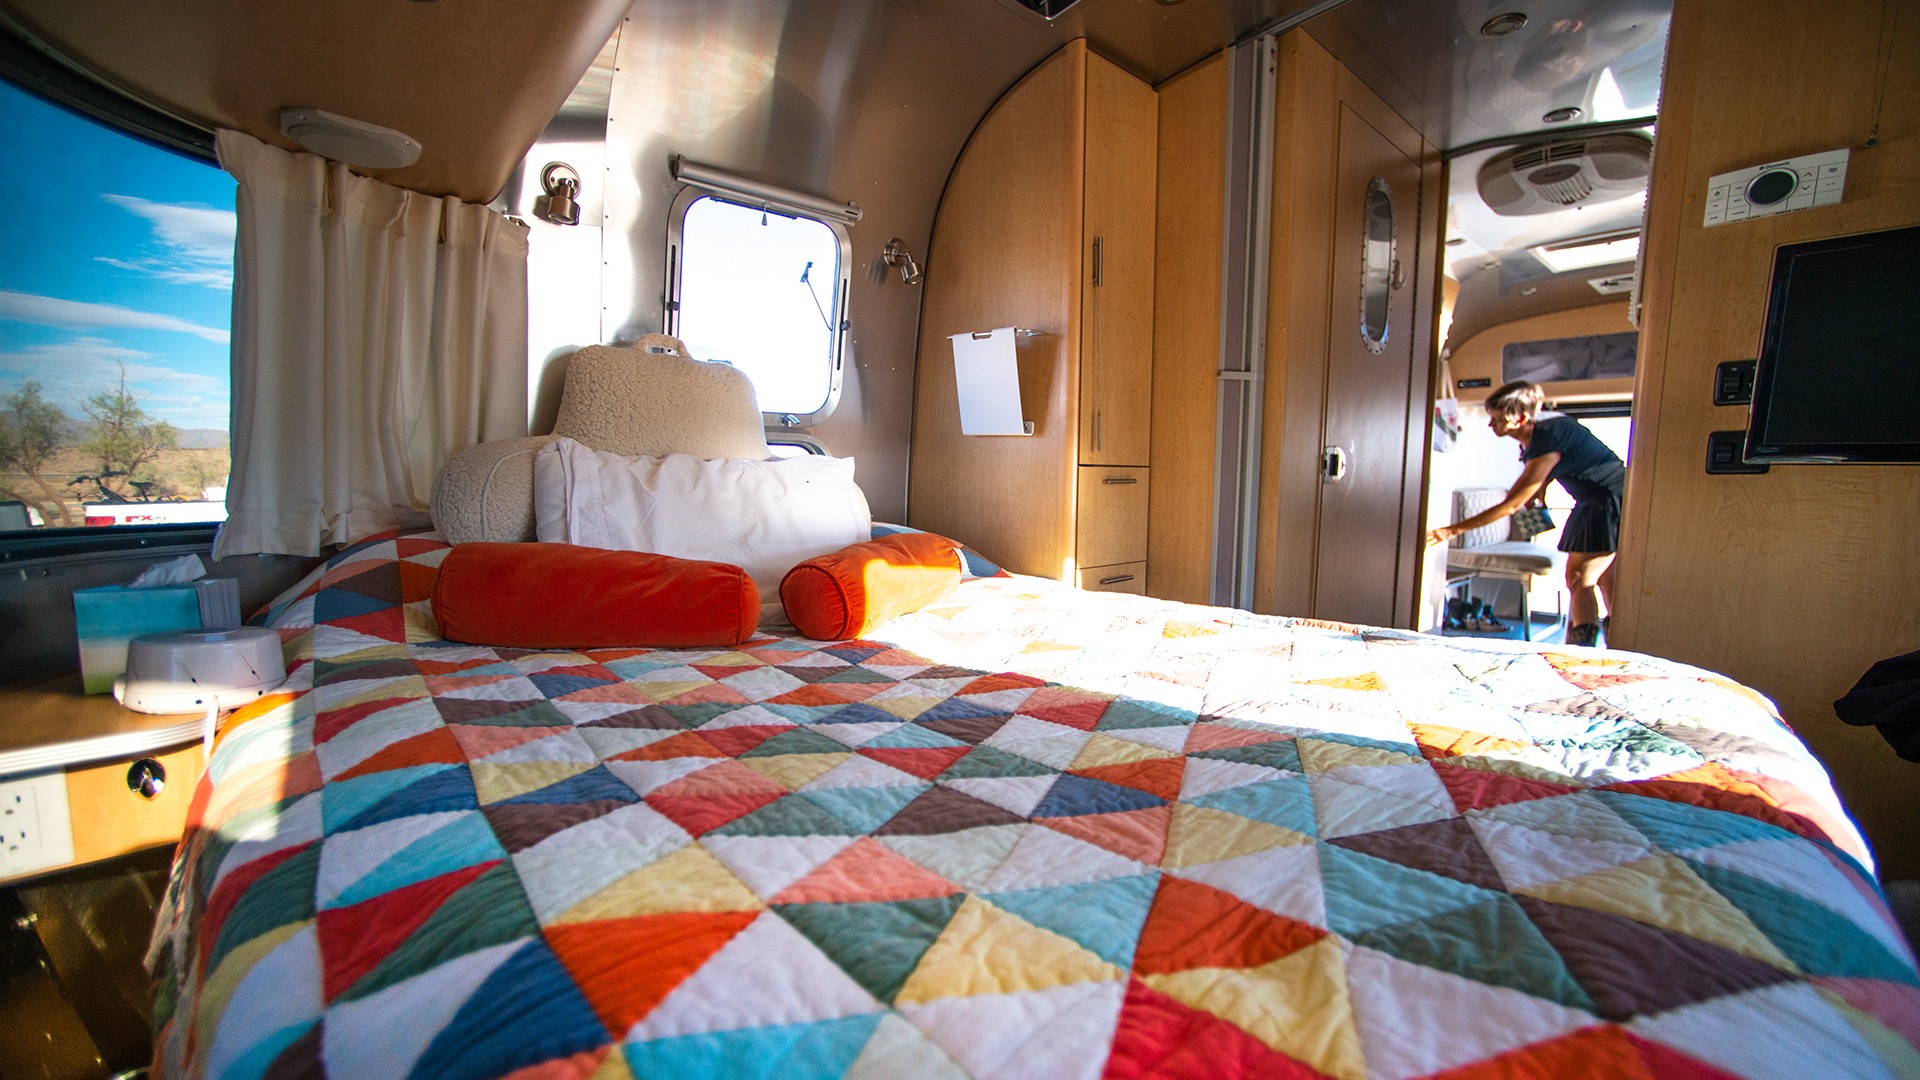 Airstream Travel Trailer Interior Bed Living the Airstream Dream